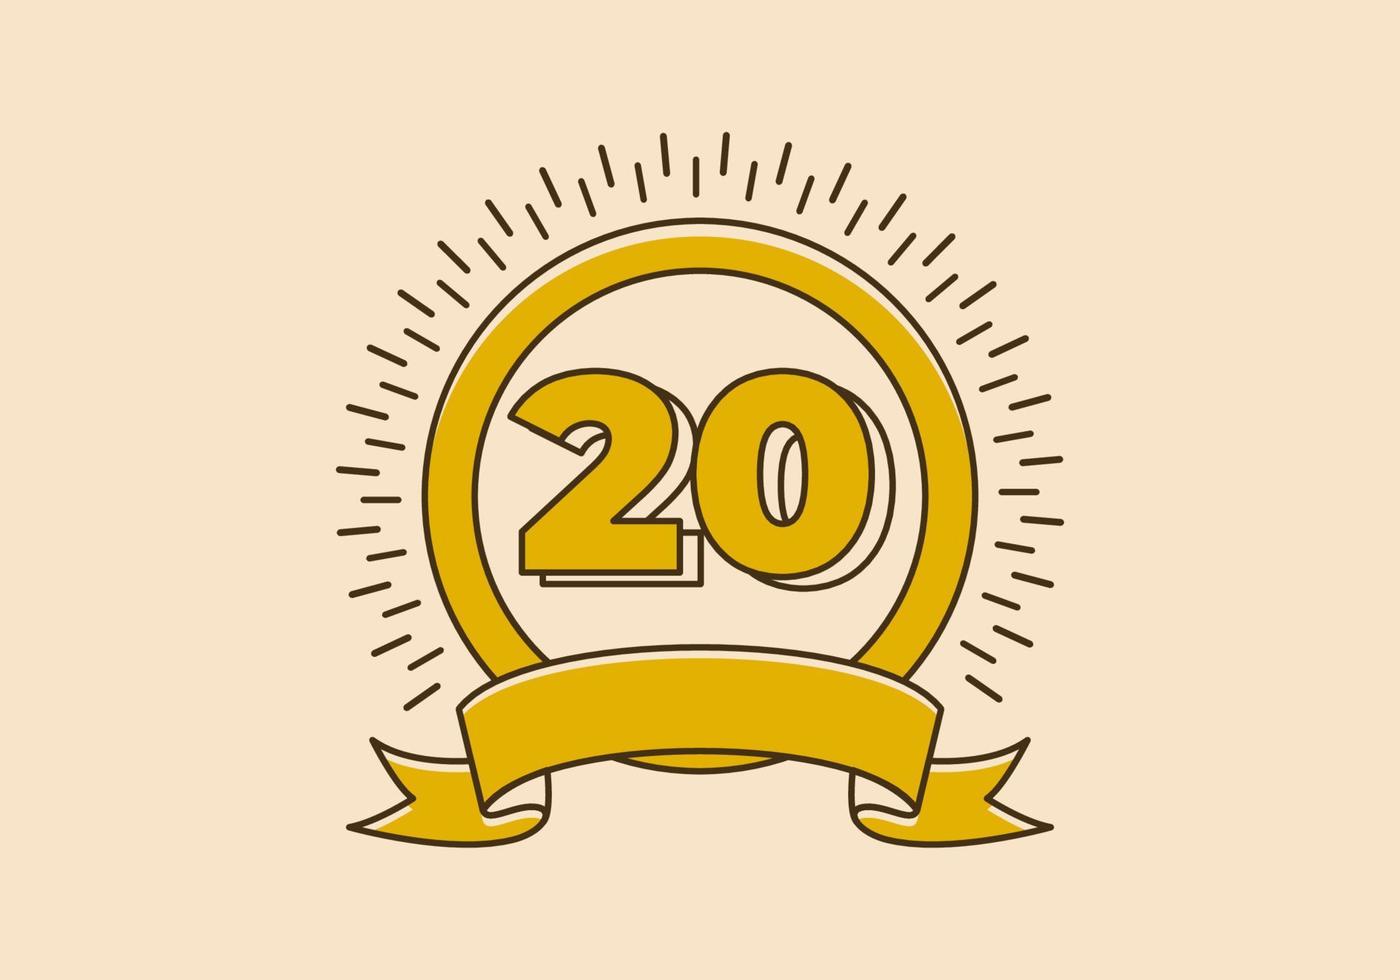 distintivo de círculo amarelo vintage com o número 20 nele vetor